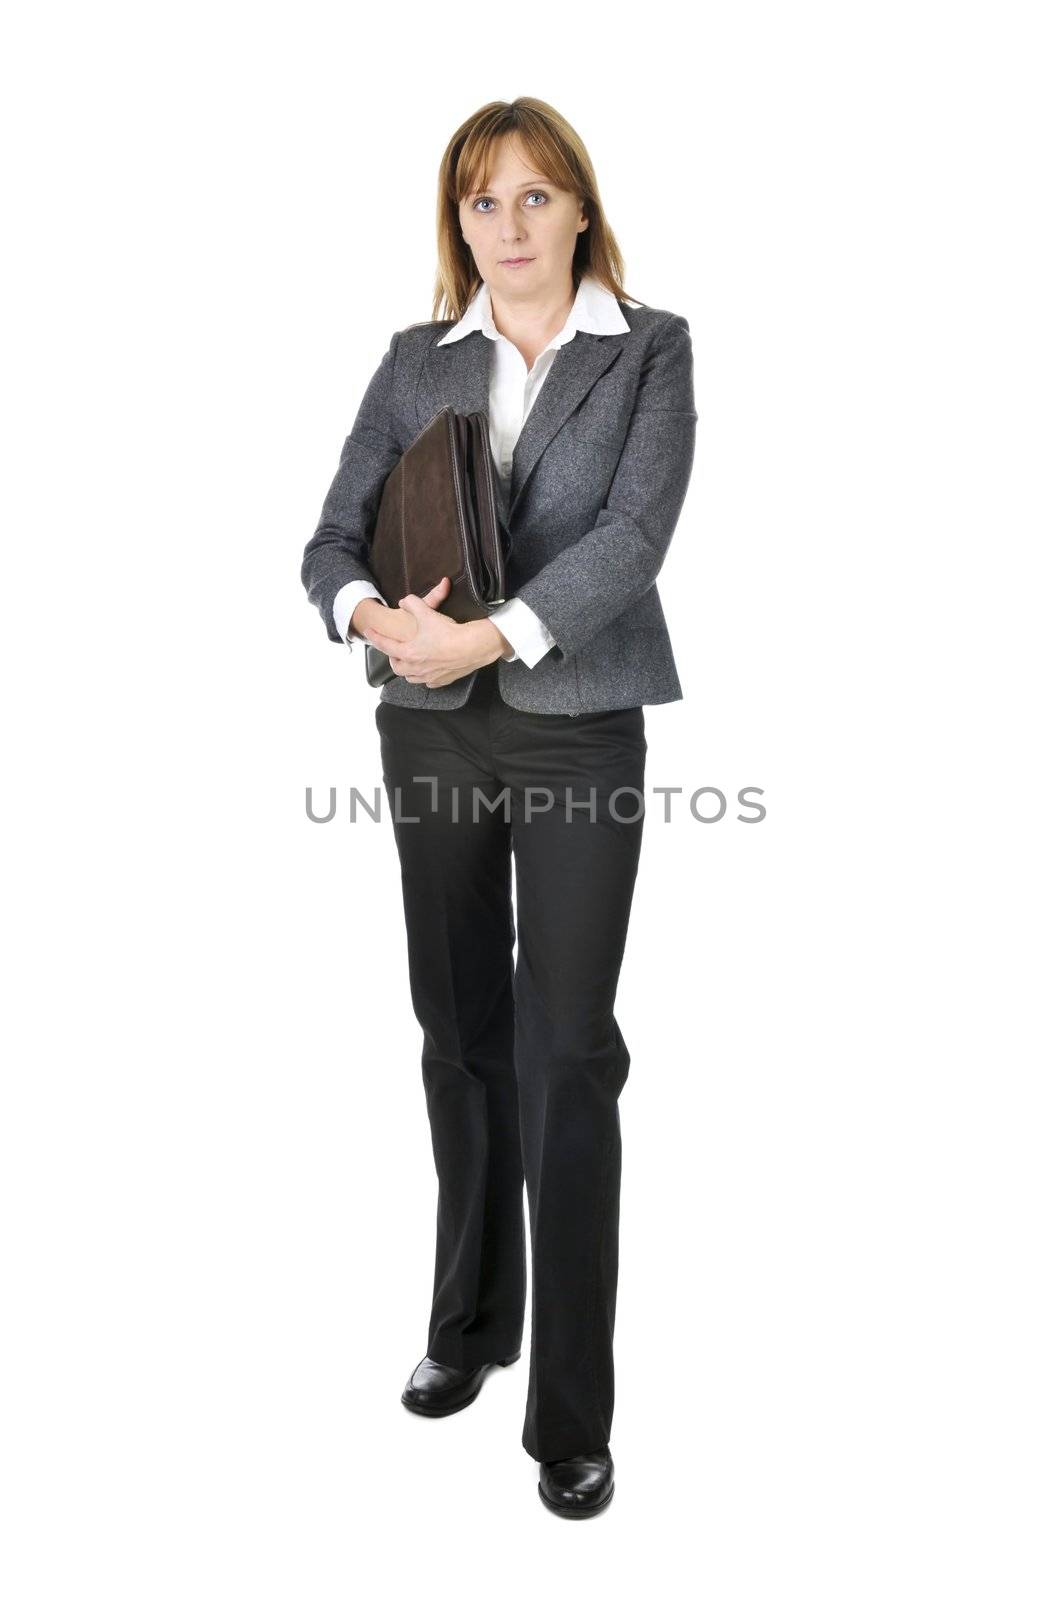 Serious businesswoman holding a portfolio isolated on white background